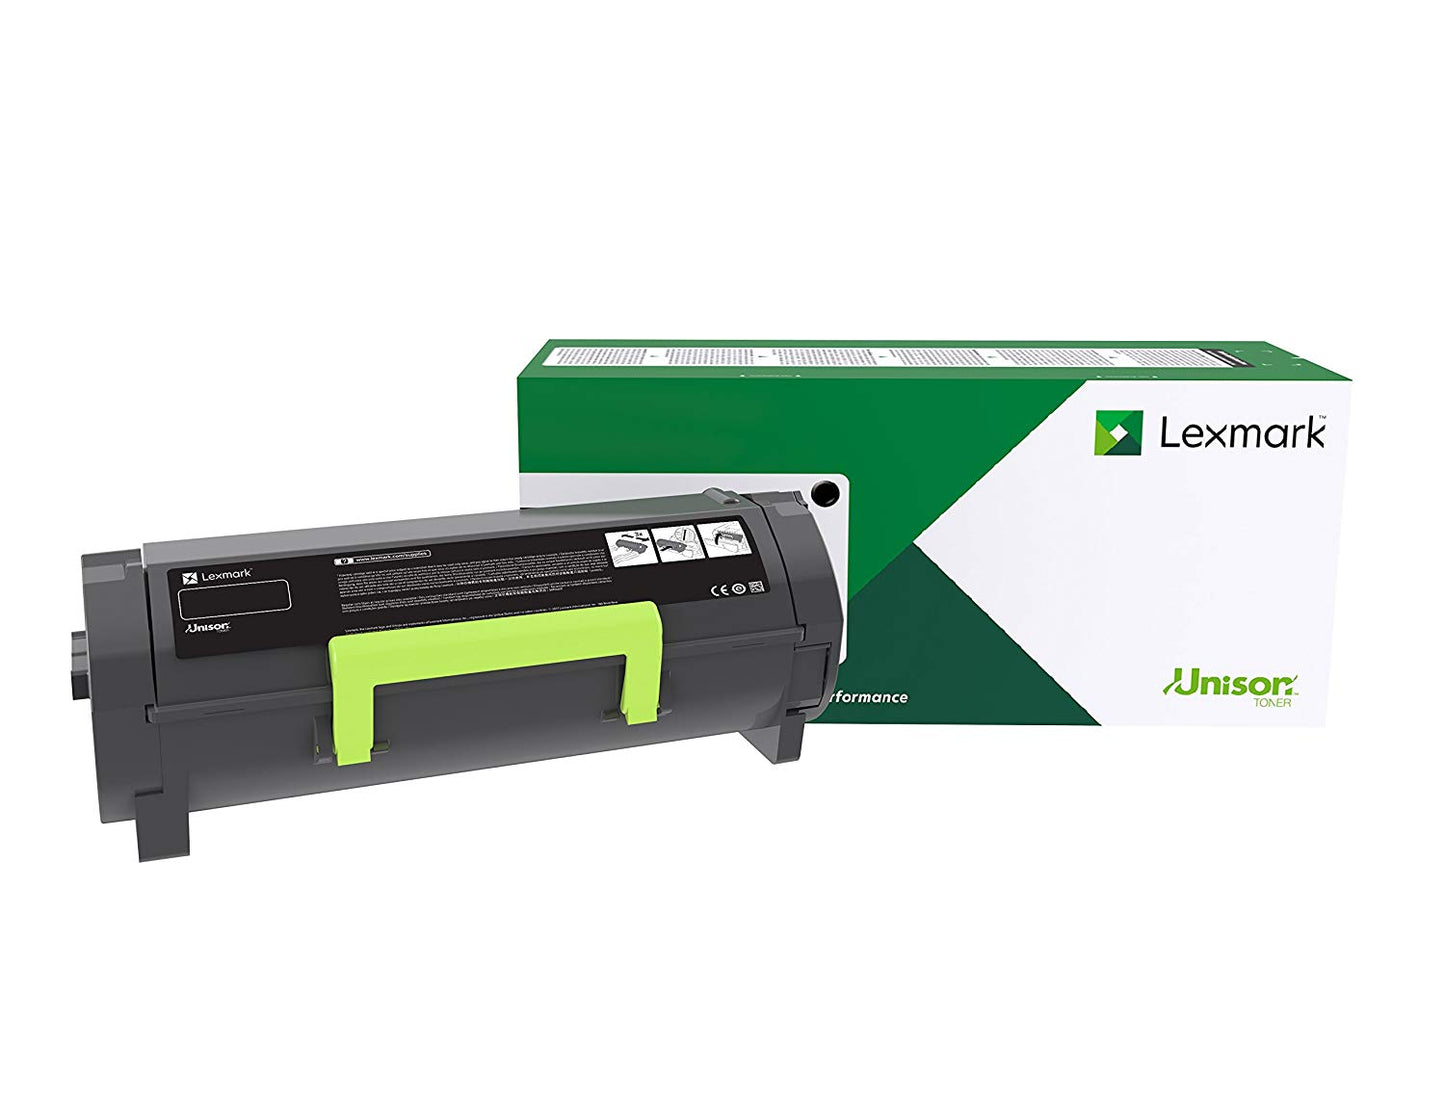 OEM Lexmark 56F1U00 Ultra High Yield Toner Cartridge for MS521, MS621, MS622, MX521, MX522, MX622 [25,000 Pages]